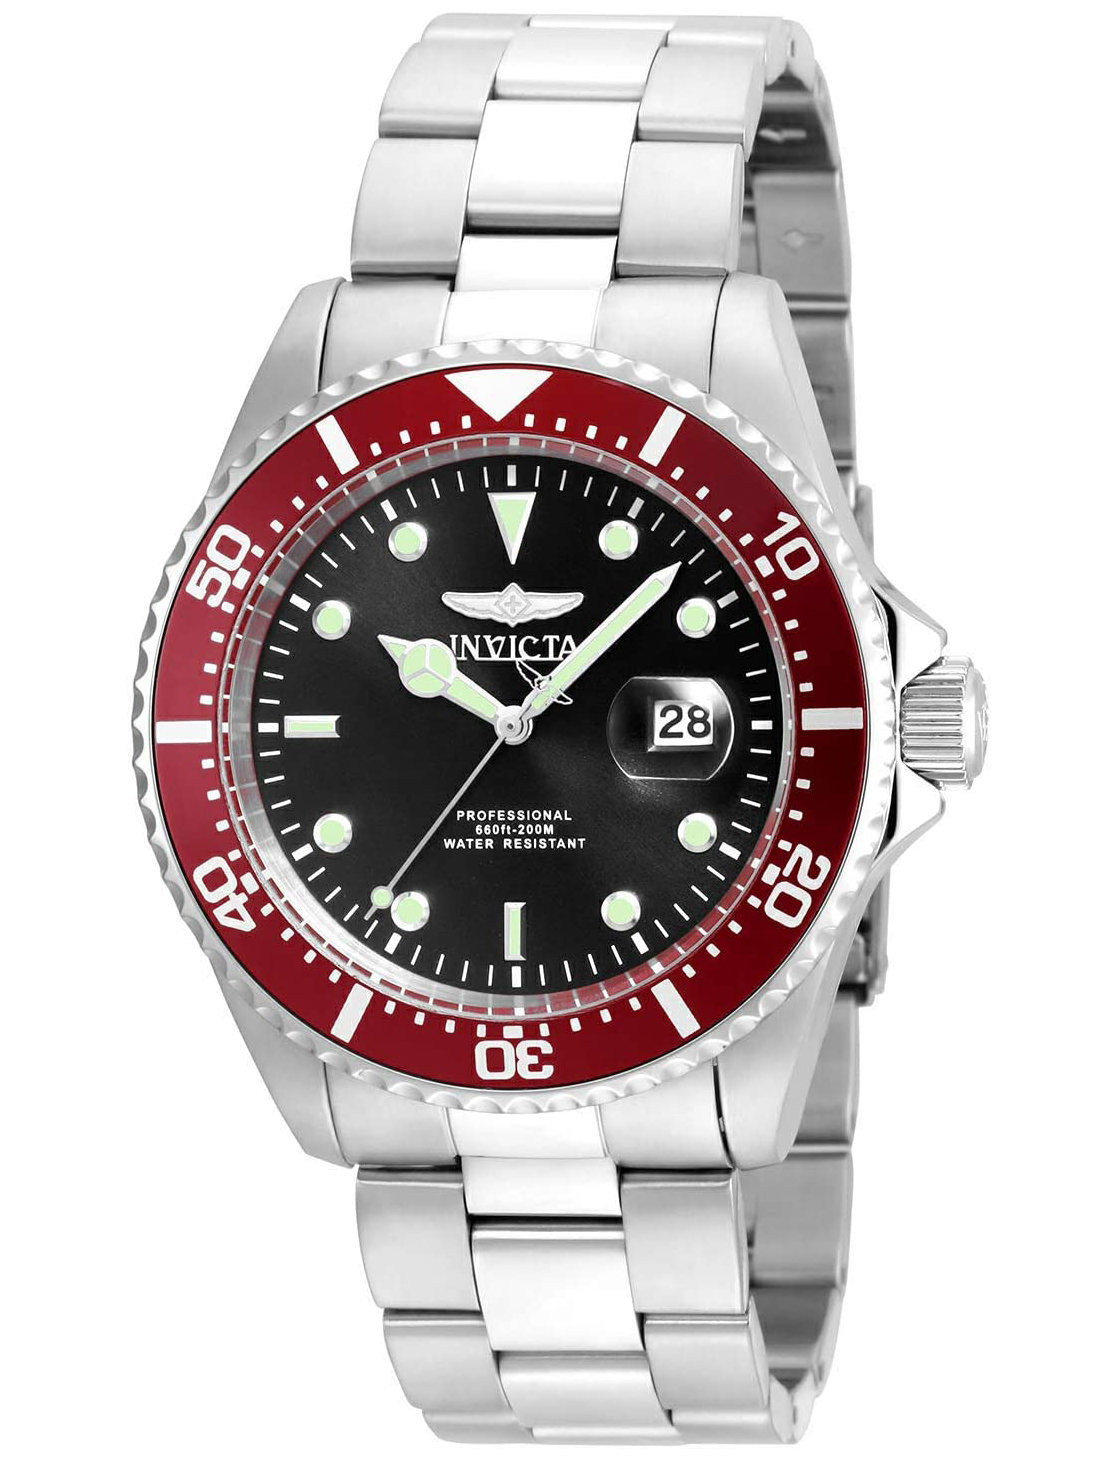 E-shop Pánske hodinky INVICTA PRO DIVER 22020 - WR200m, ciferník 43mm (zv002e)